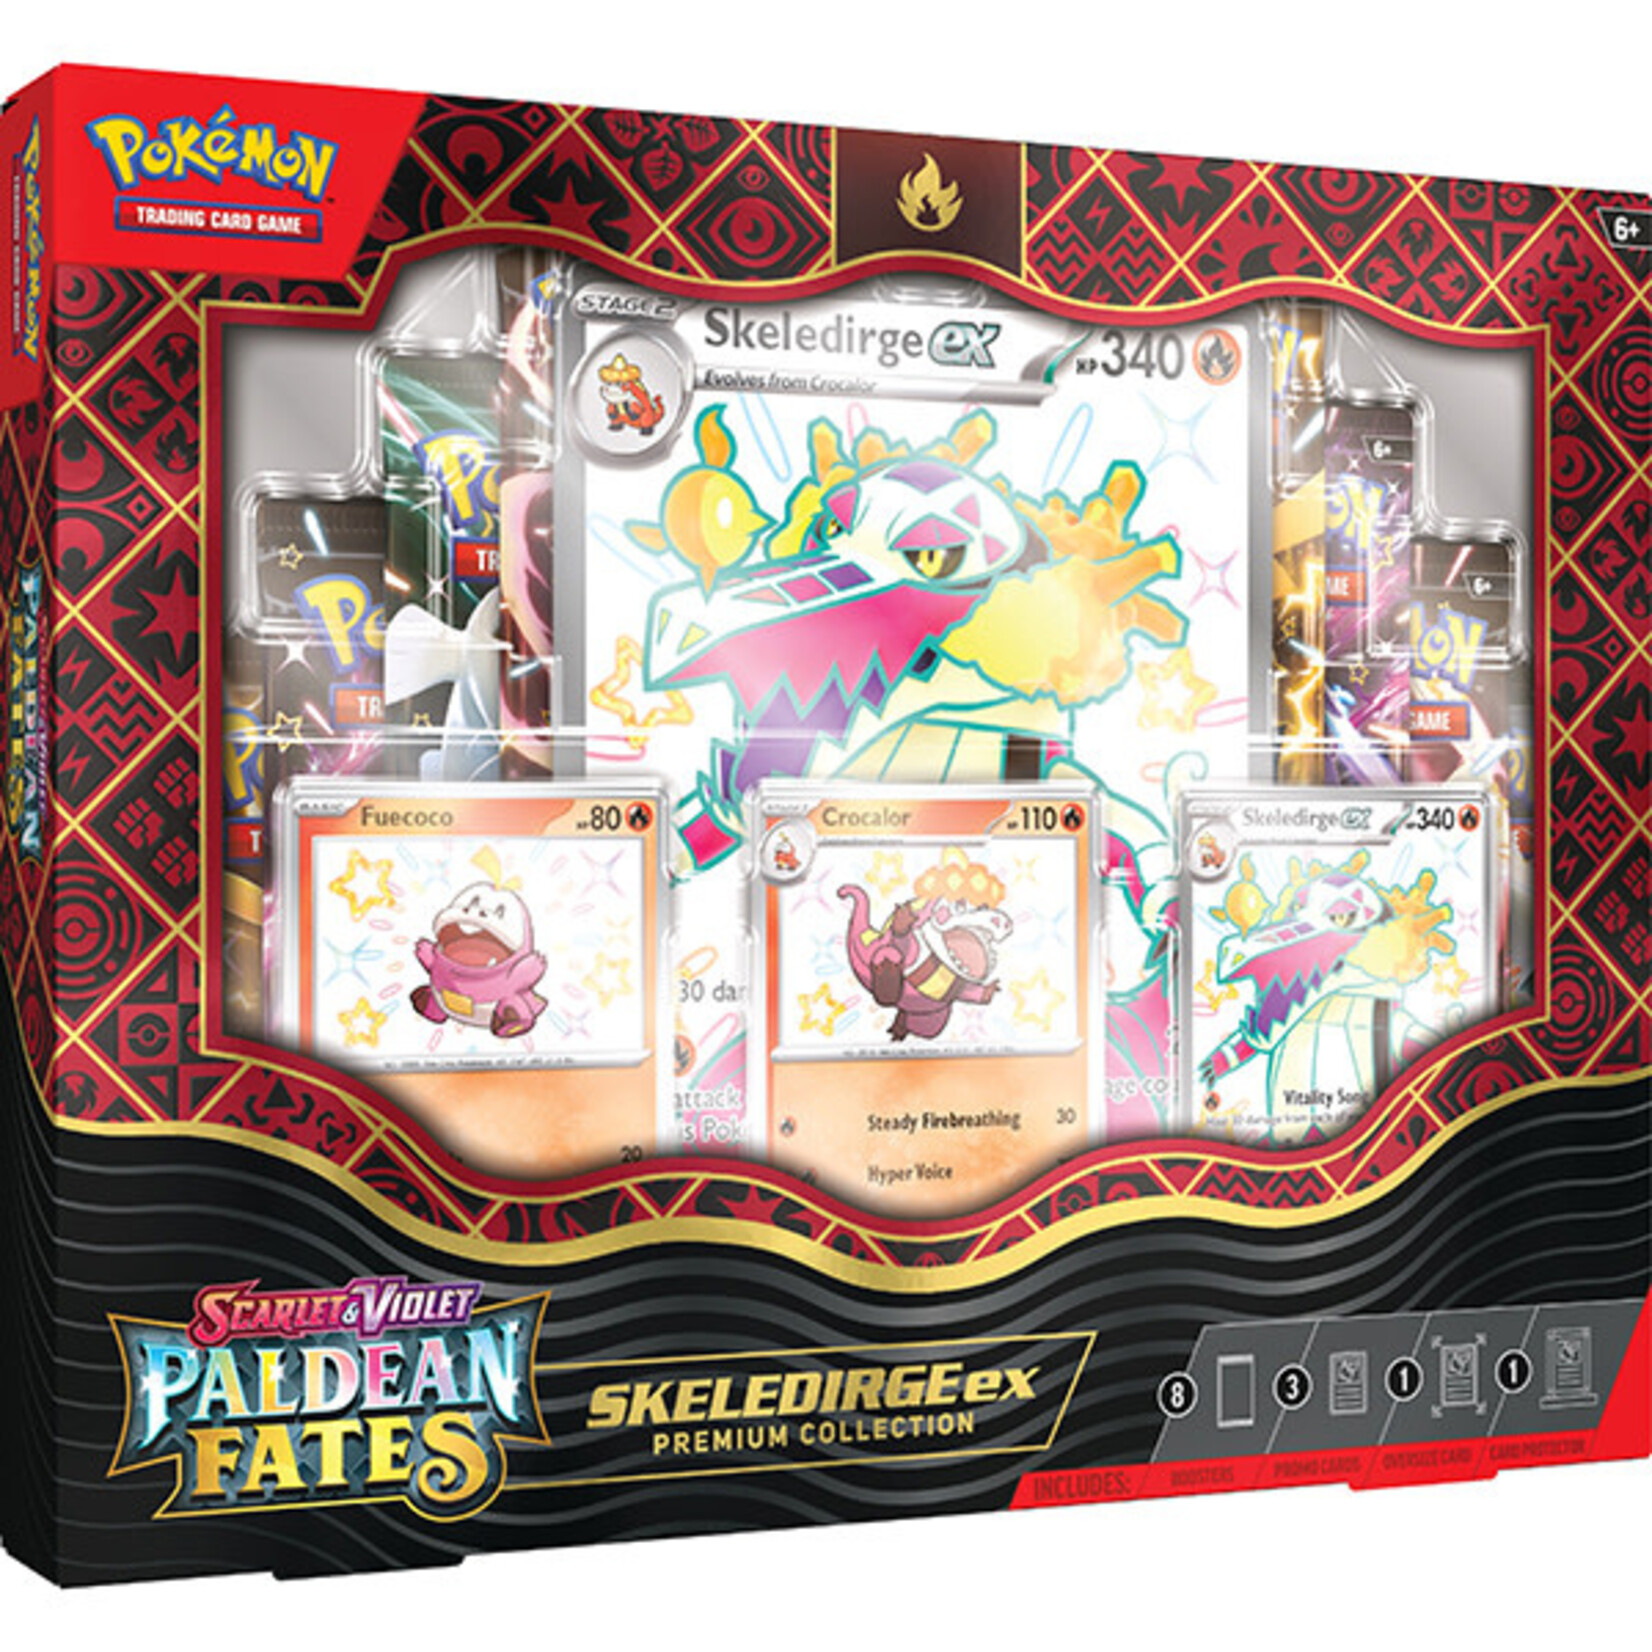 Pokémon Paldean Fates Pokemon EX Premium Collection - Skeledirge EX